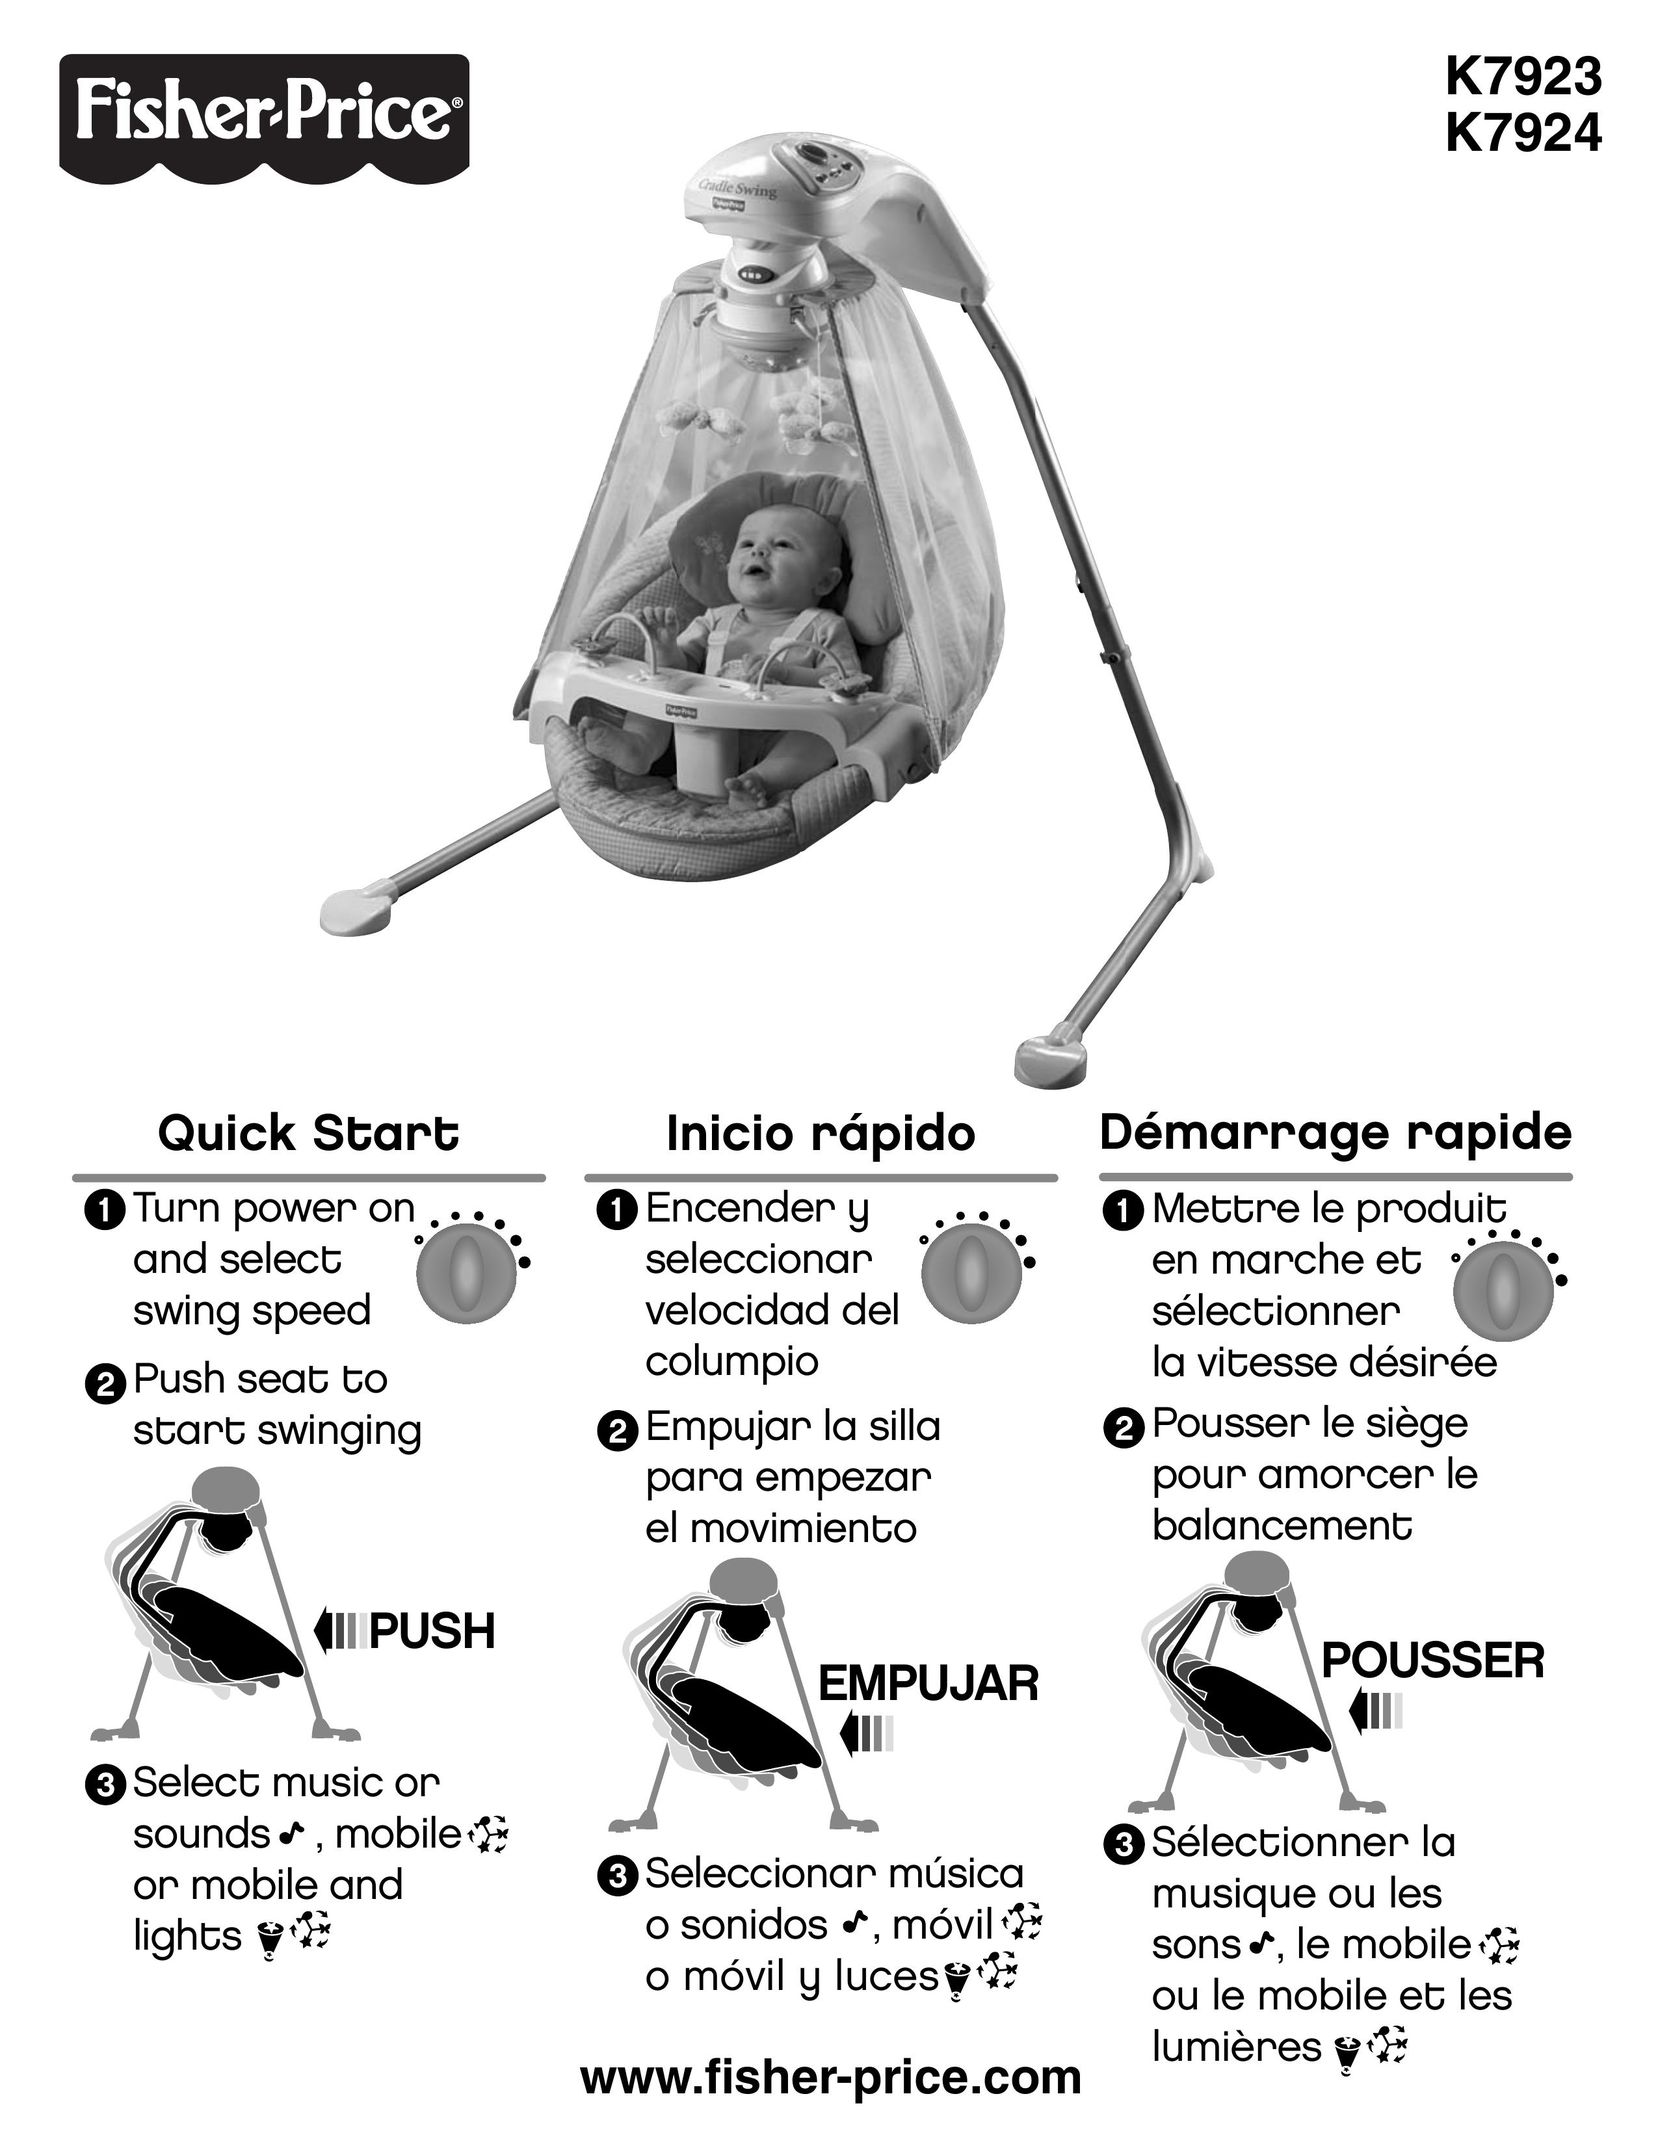 Fisher-Price K7923 Baby Swing User Manual